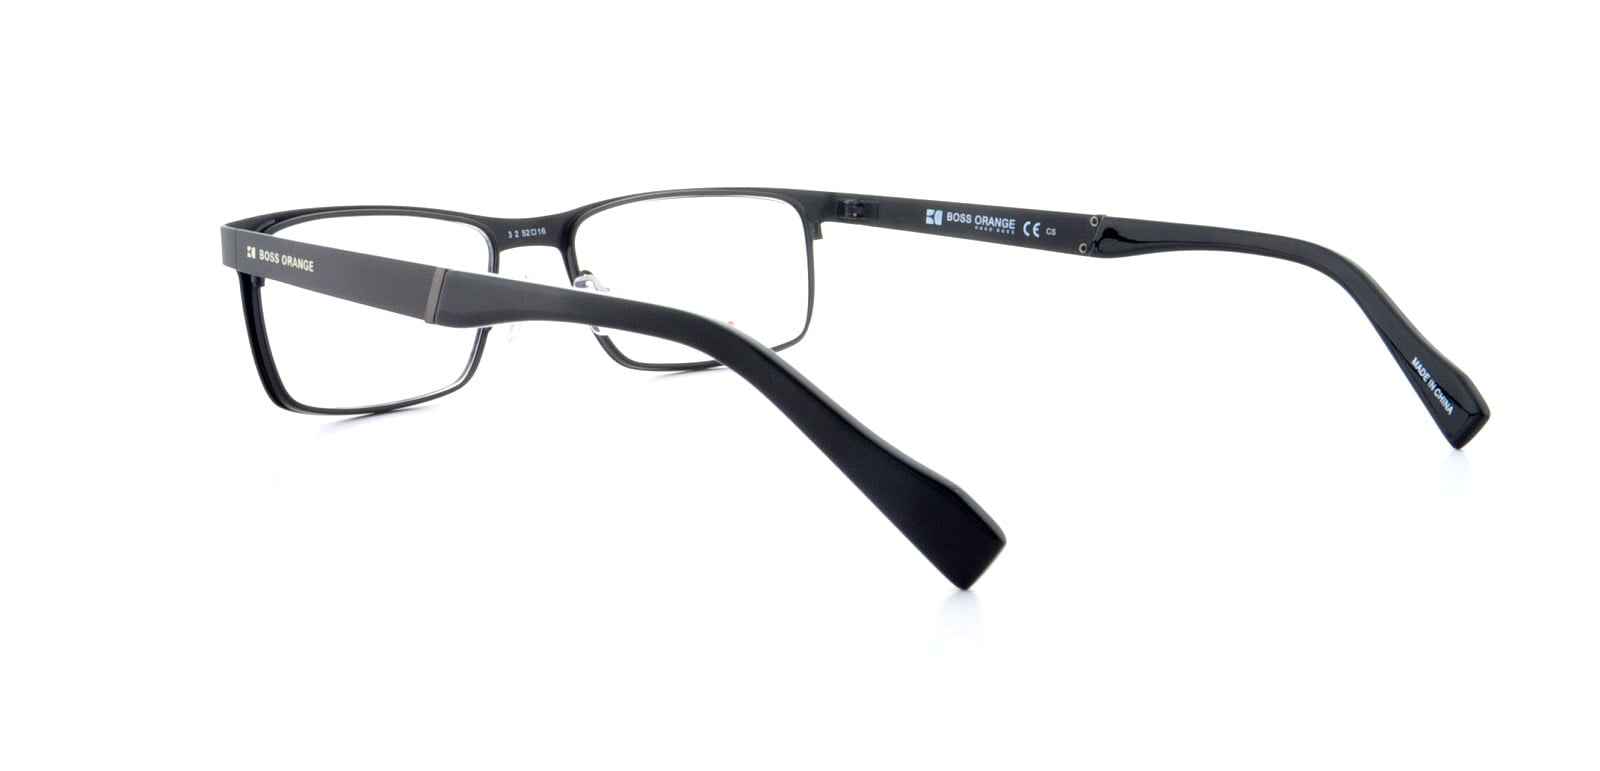 ORANGE Eyeglasses 0085 0003 Matte Black -